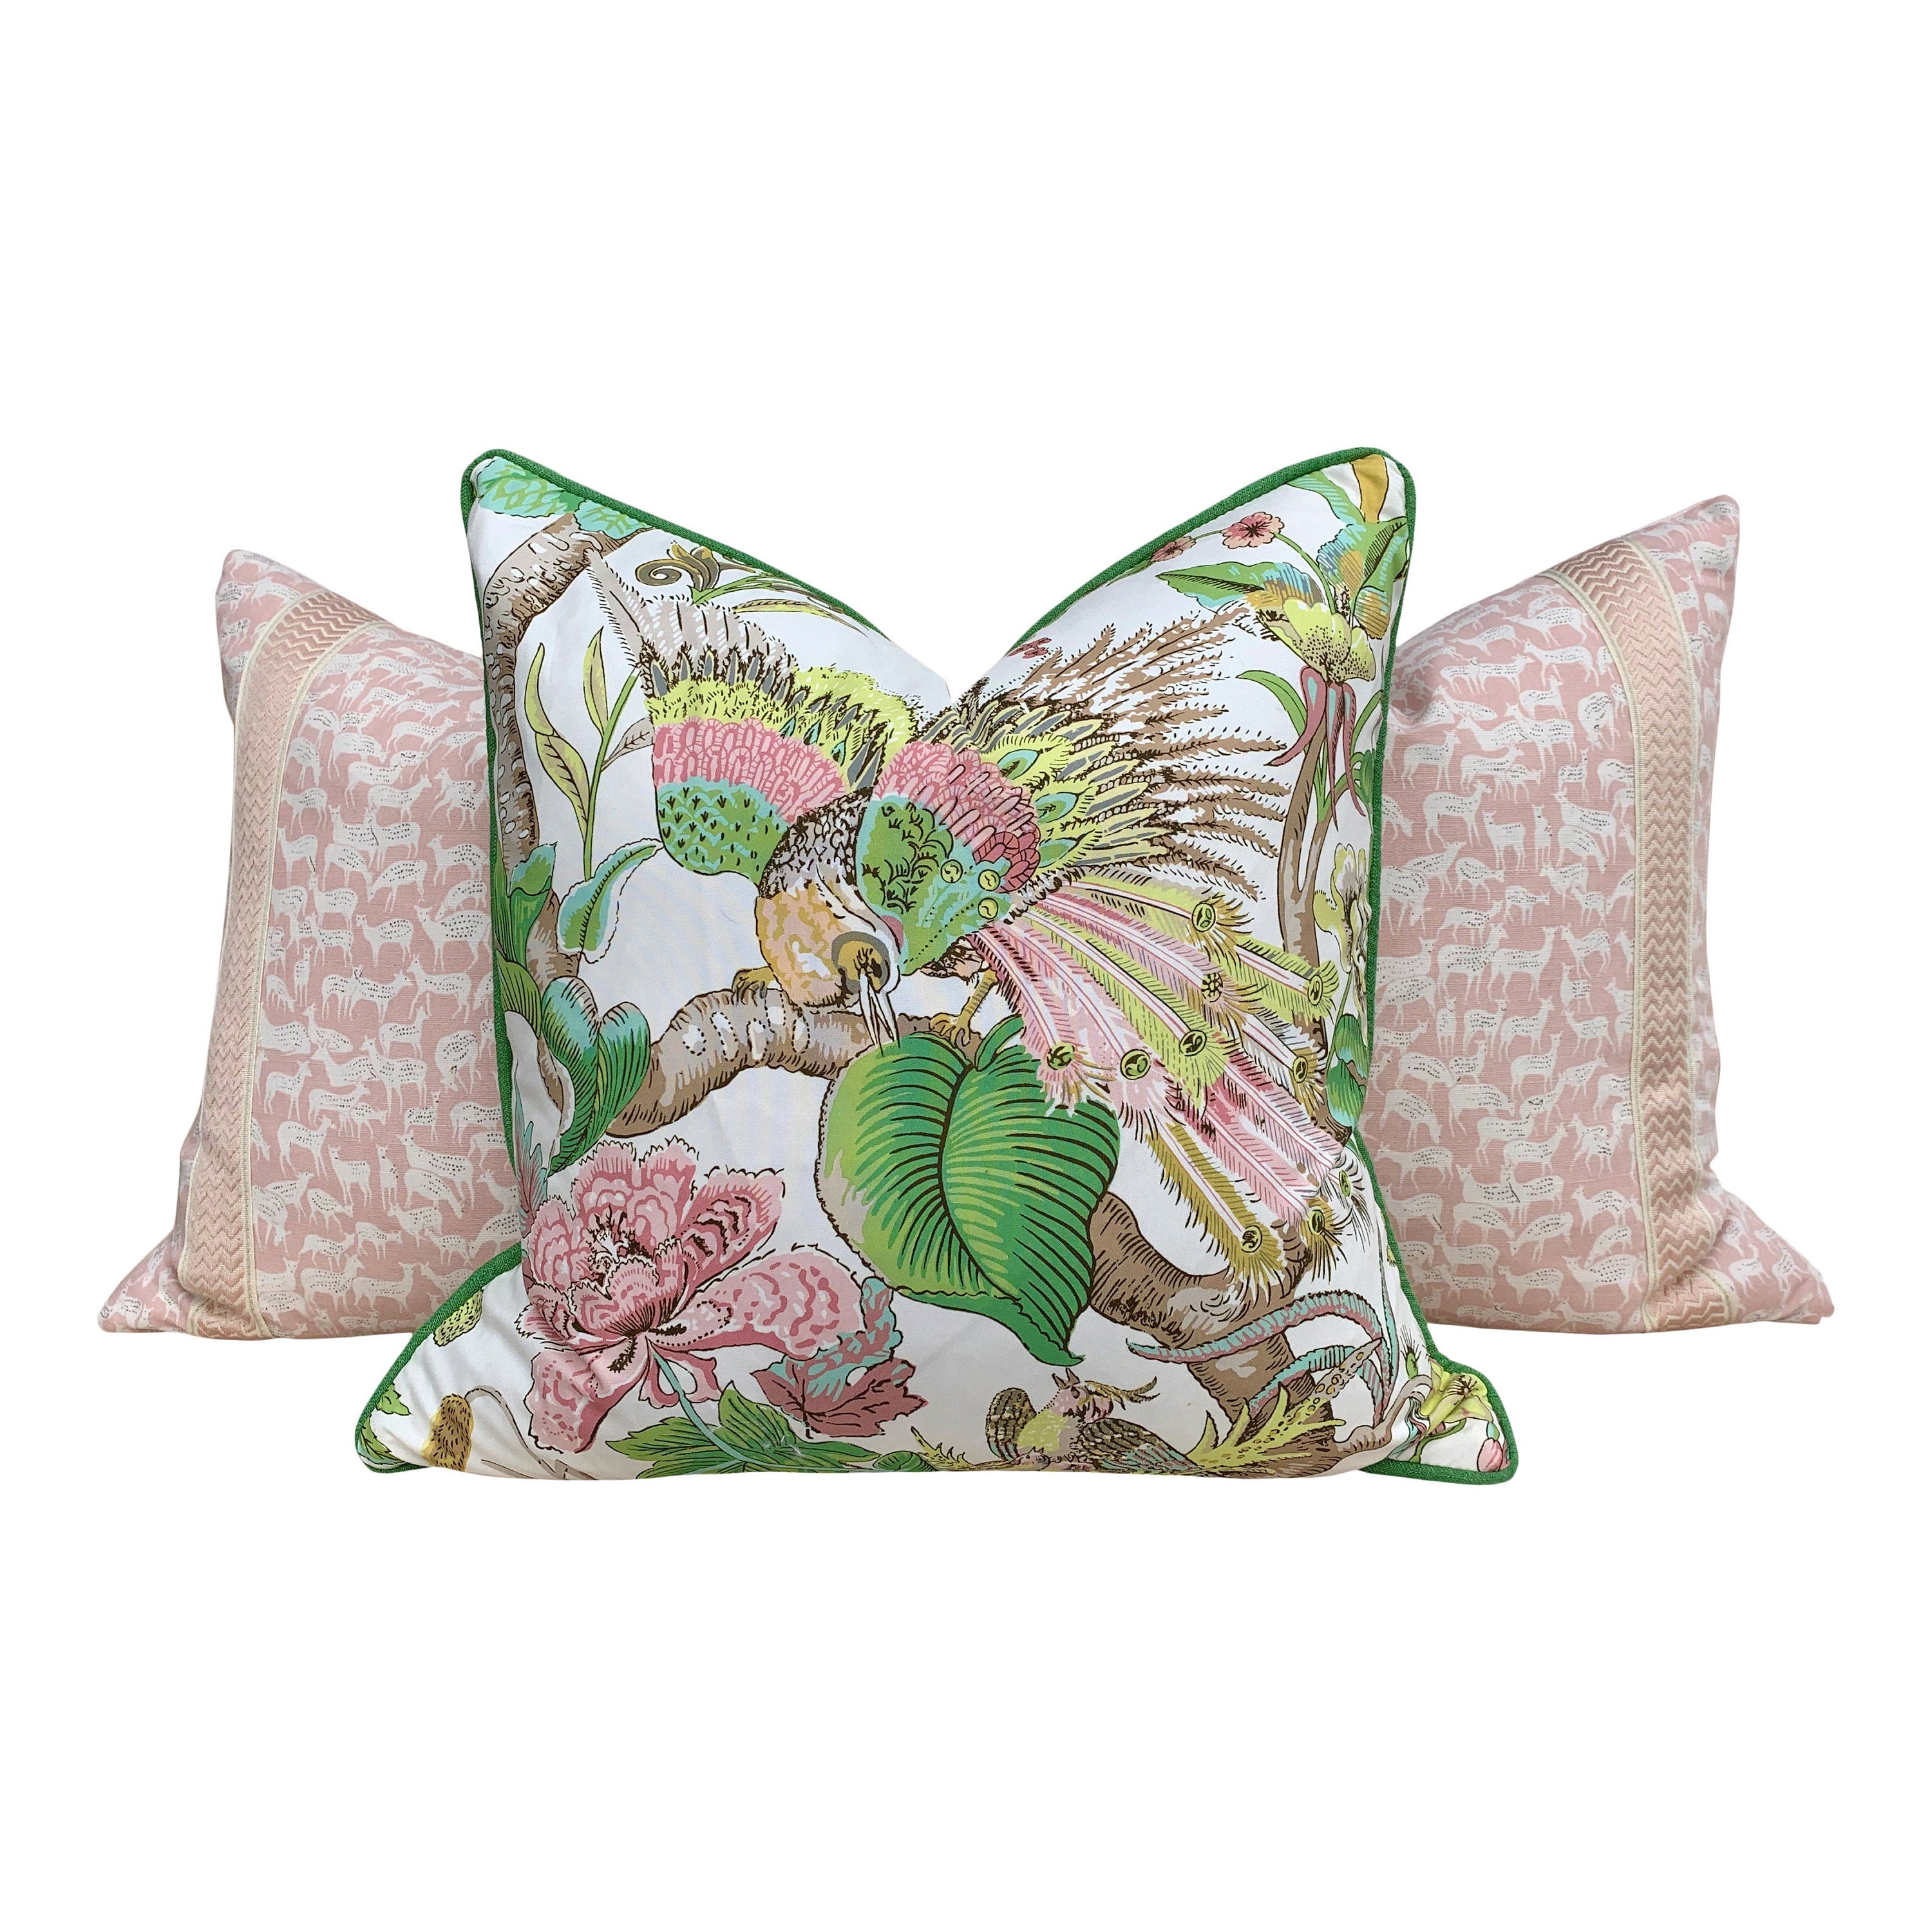 Schumacher Cranley Garden Green Pillow. Chinoiserie Green Pillow, Green Pink Pillow, Euro sham Cushion, Exotic Bird Accent Cushion Cover